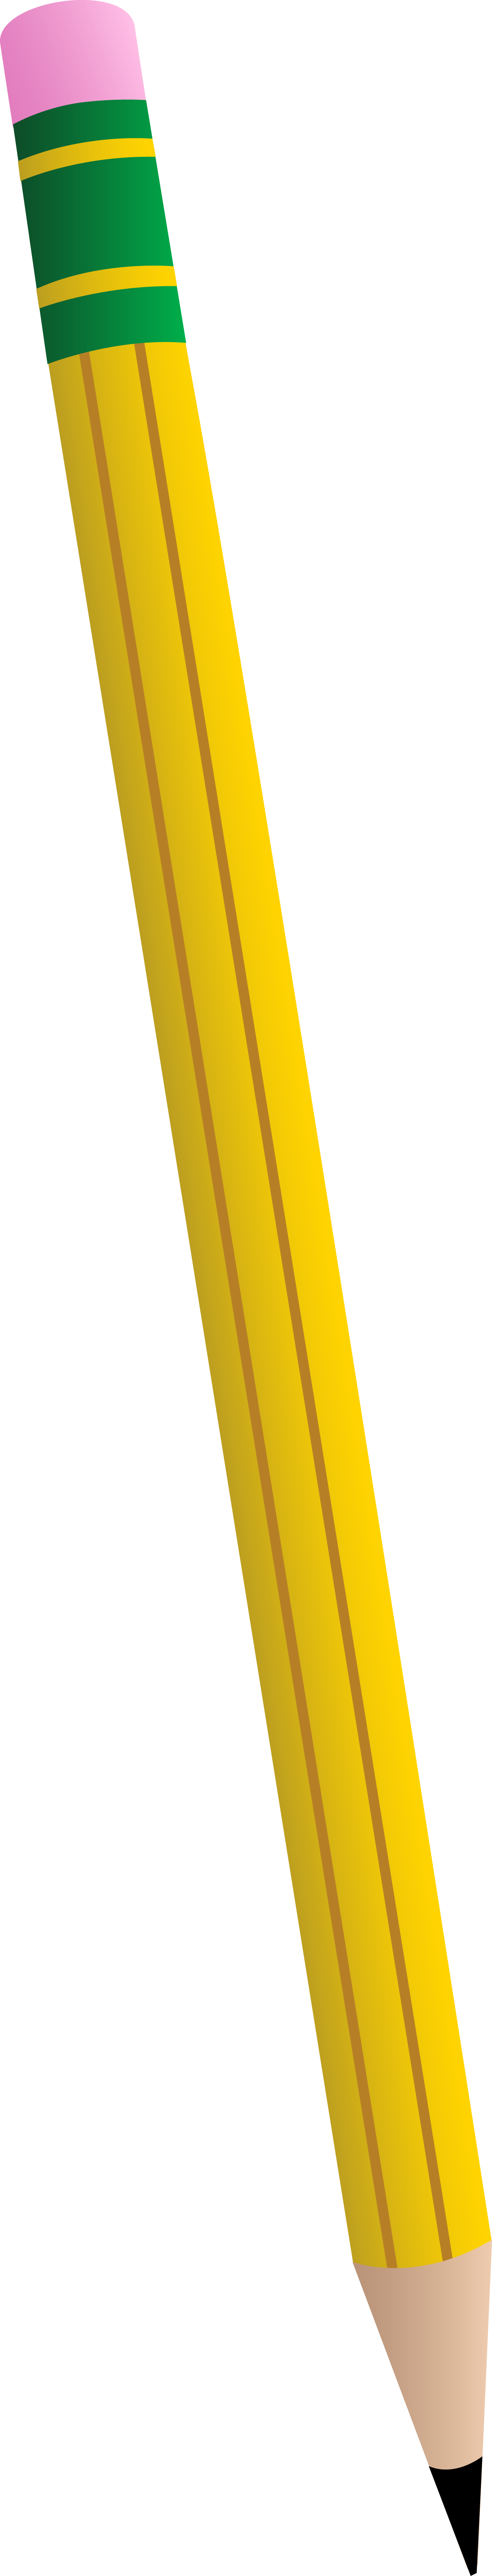 Yellow Number 2 Pencil - Orange (1209x6325)